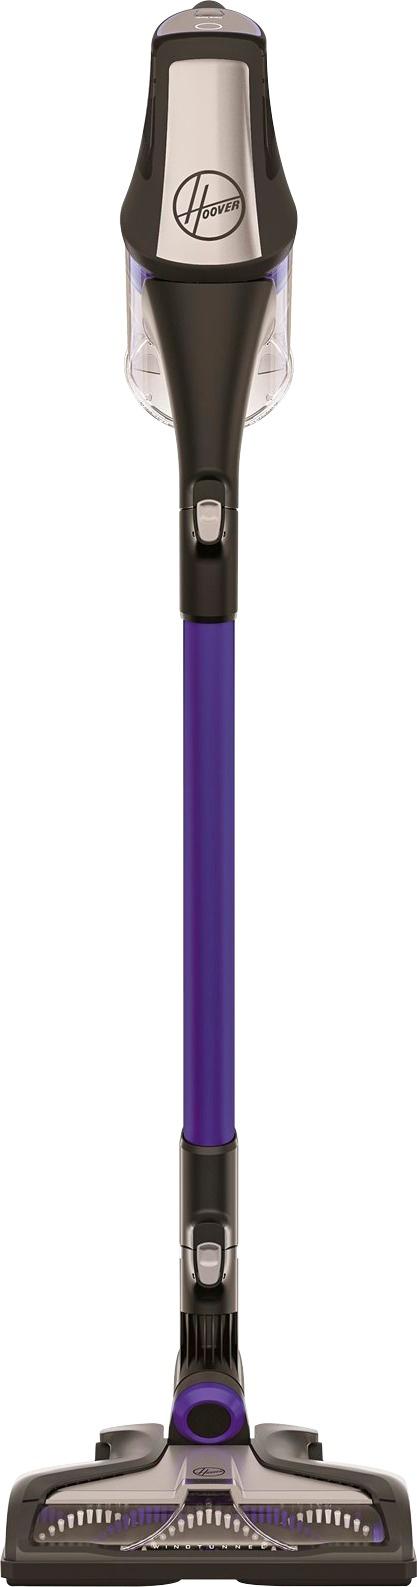 Bionaire® Purple Polka Dot CrockPot SCR252POLKA